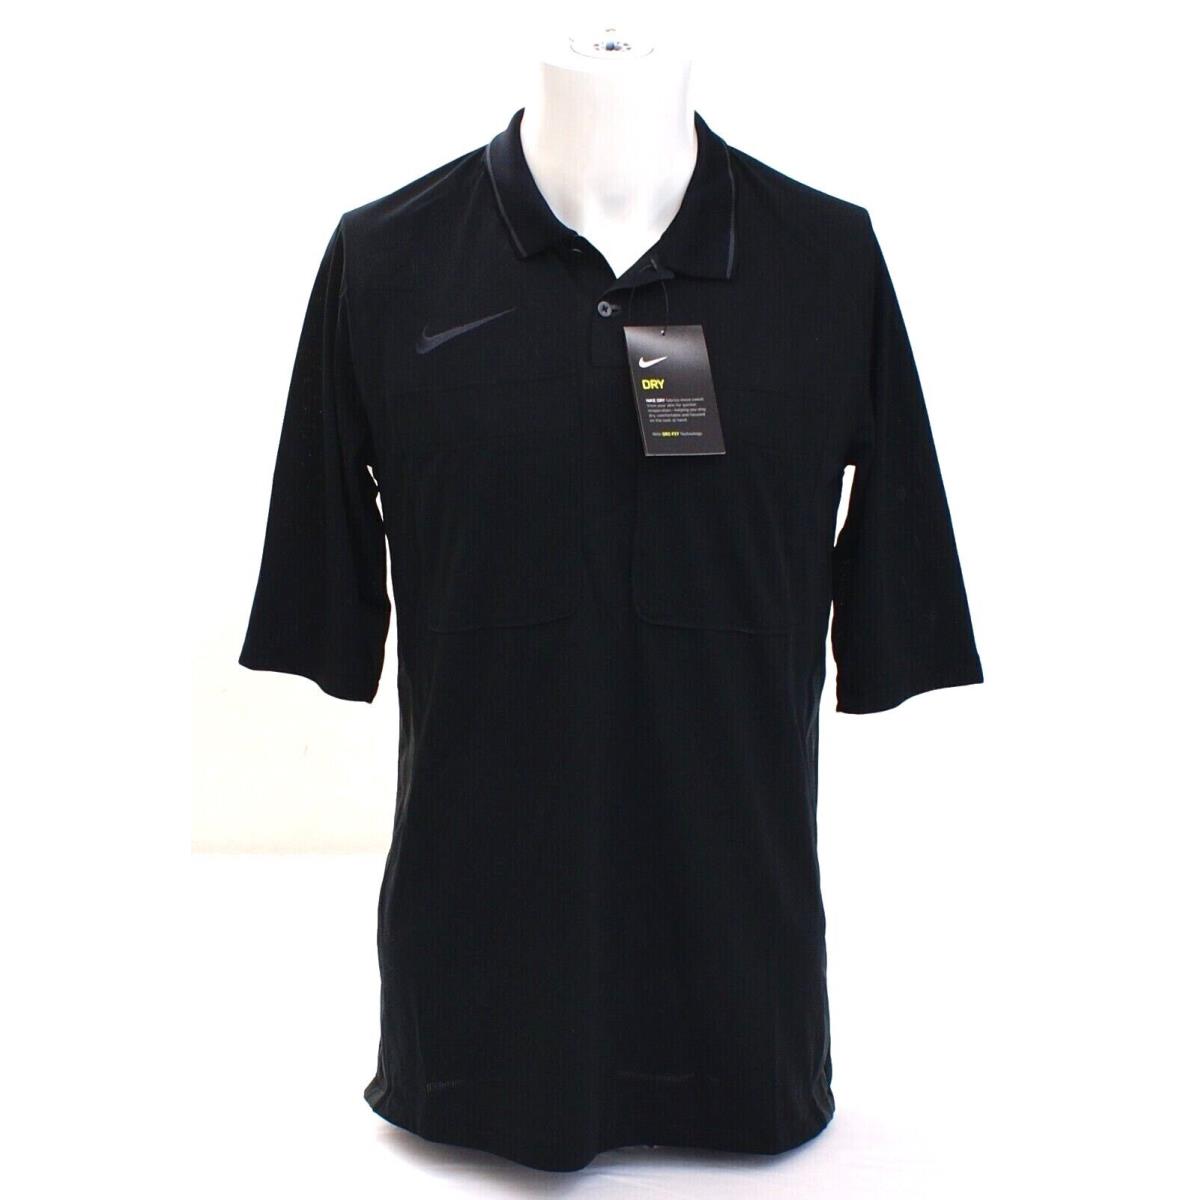 Nike Dri Fit Black Short Sleeve Referee Soccer Jersey Shirt Men`s M